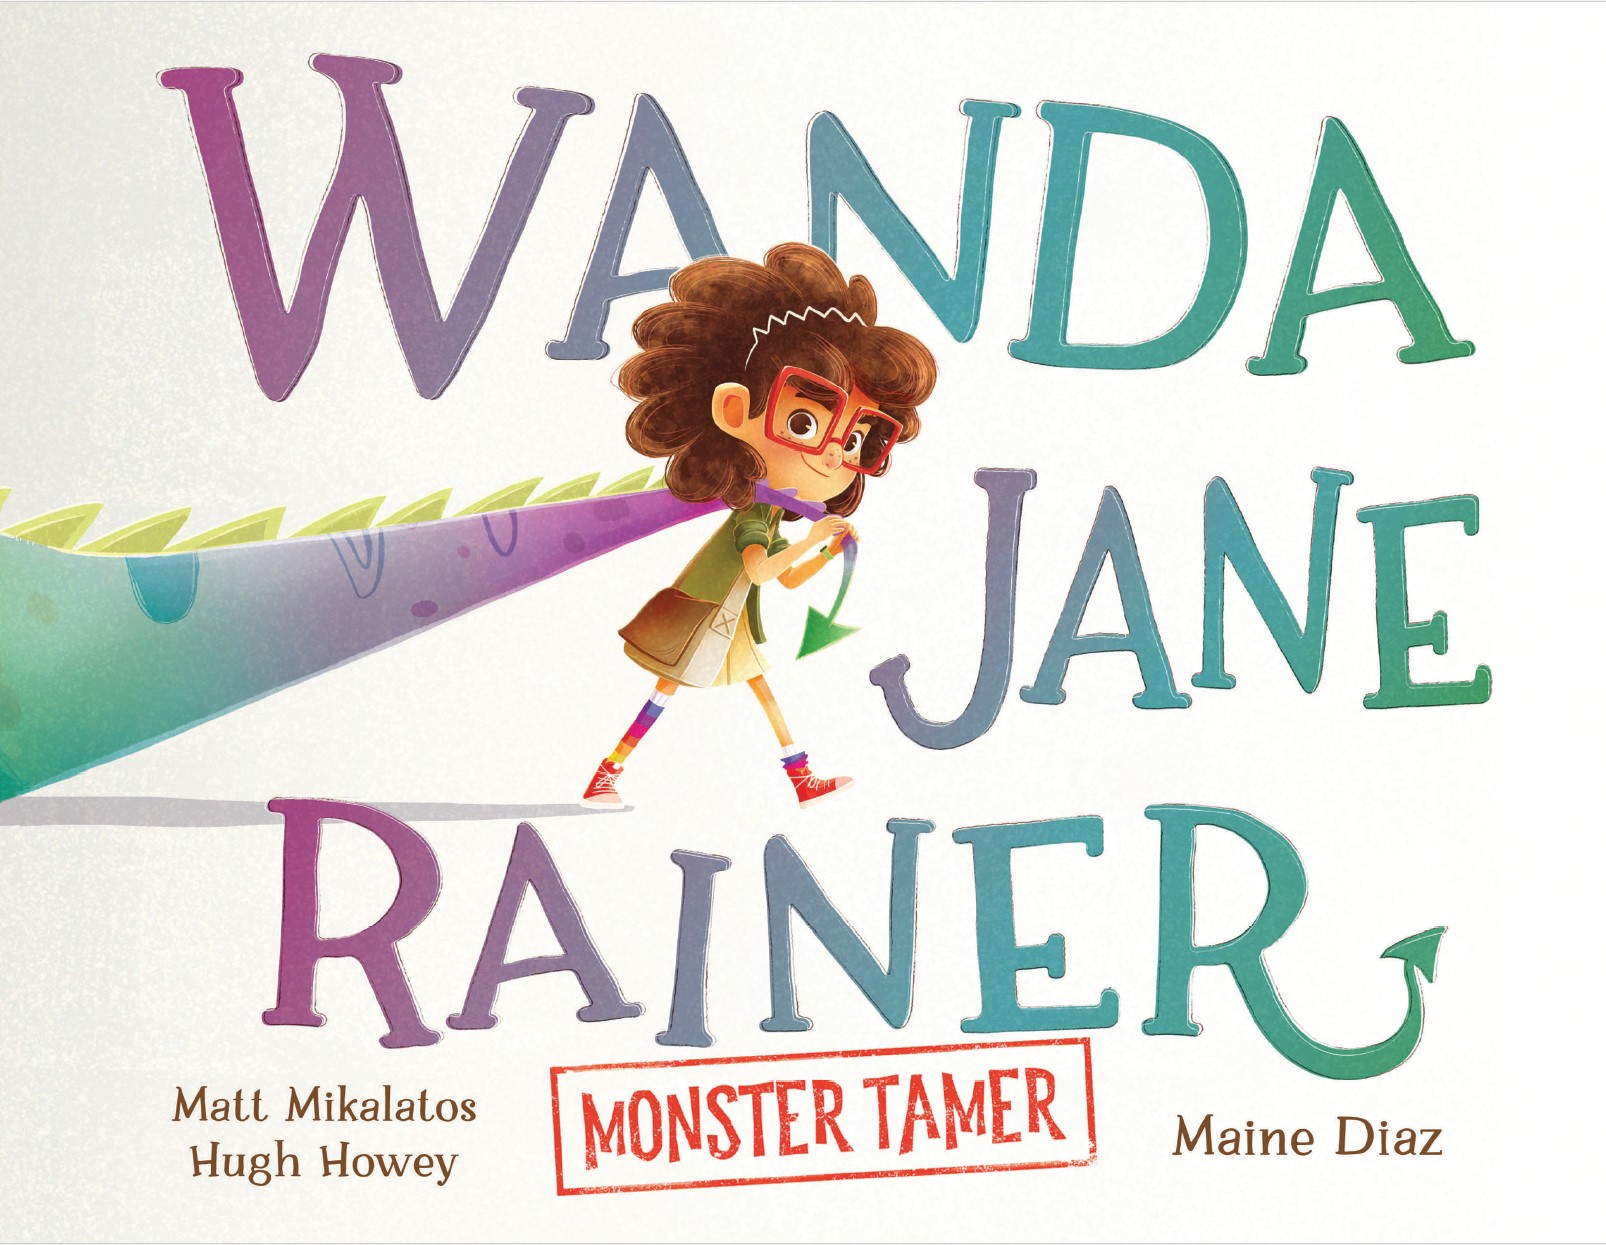 Meet Wanda Jane Rainer: Monster Tamer!